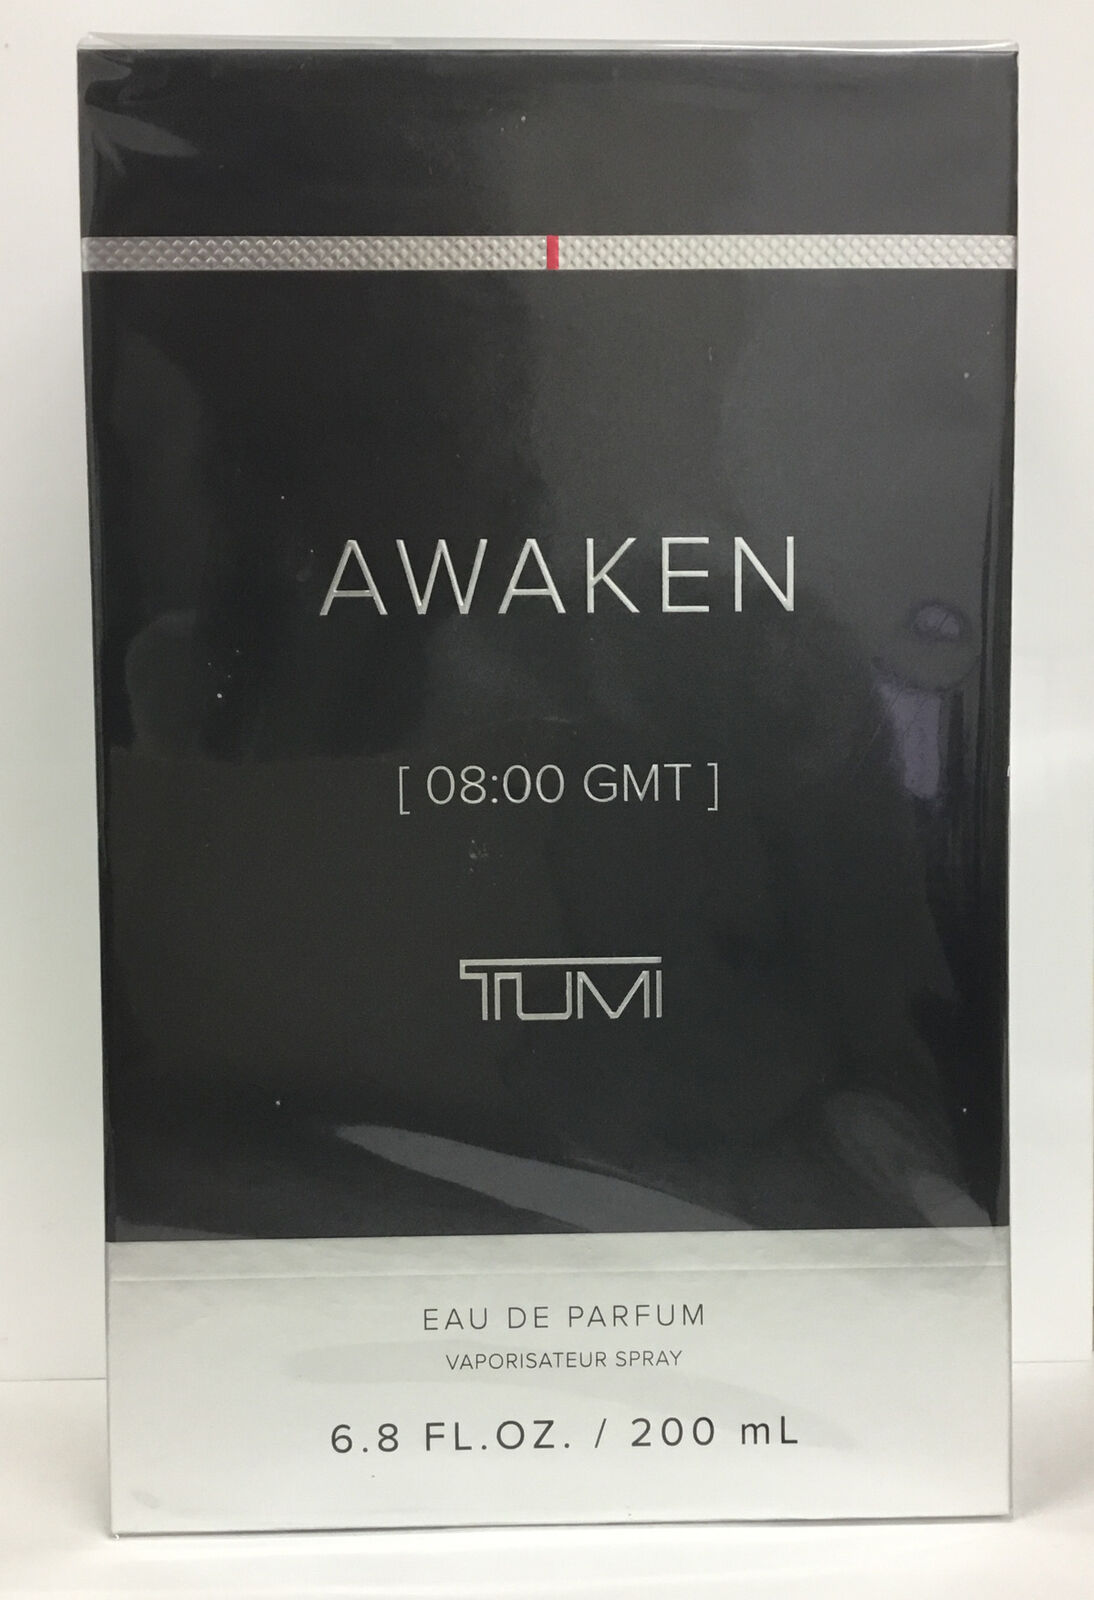 Tumi Unwind Awaken Eau De Parfum 6.8oz As Pictured